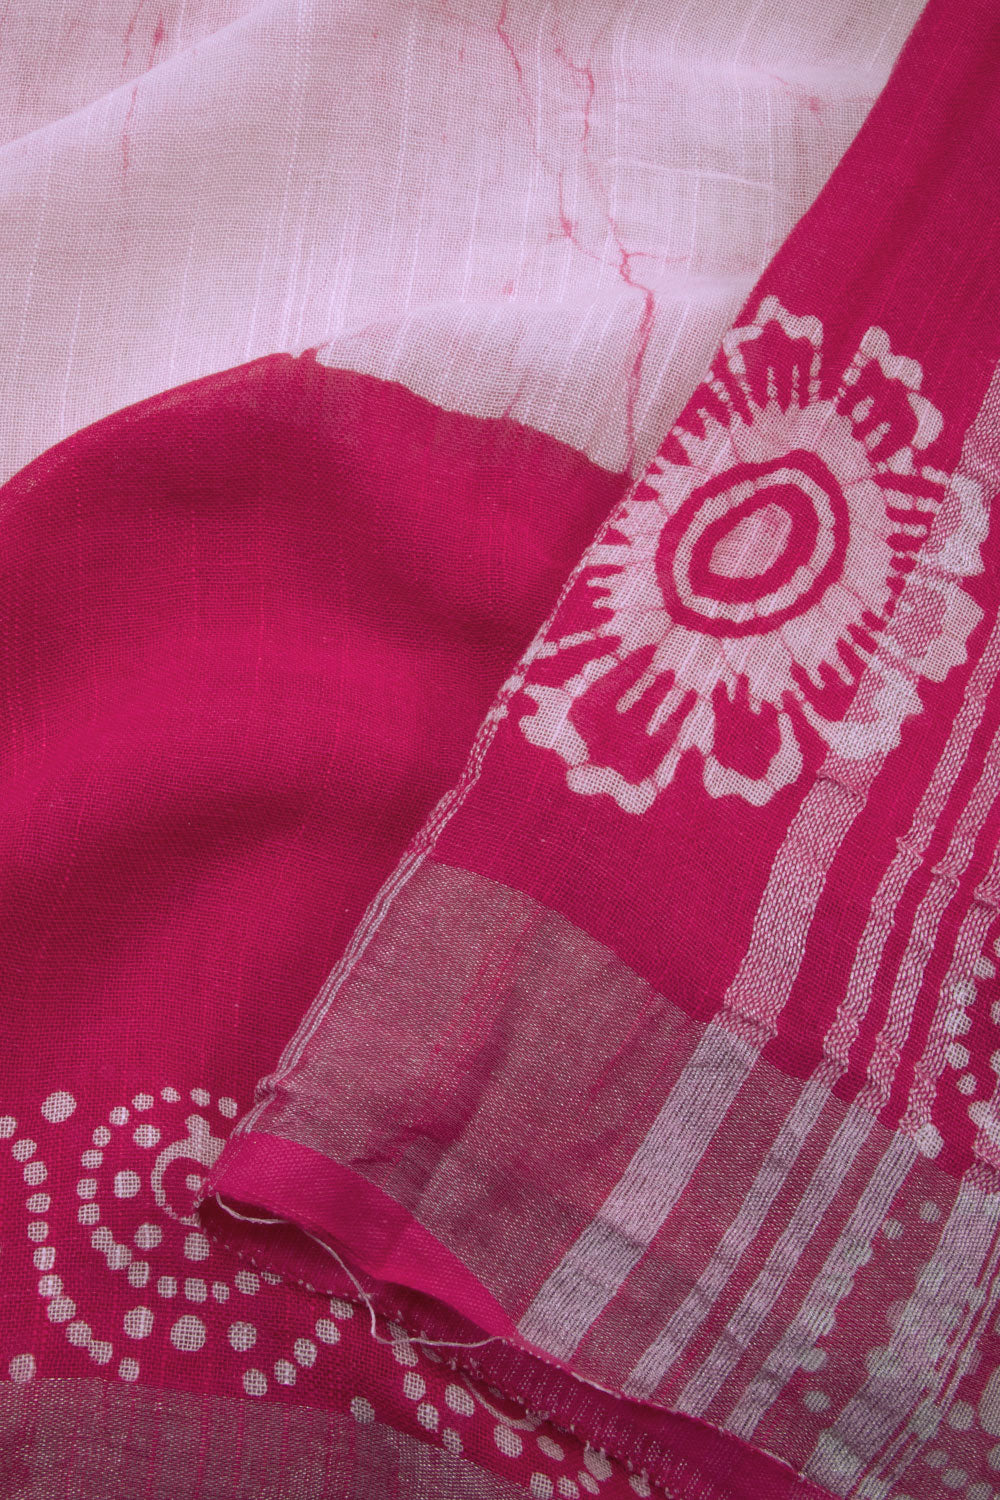 Pink with Off White Batik Printed Linen Cotton Saree - 10063863